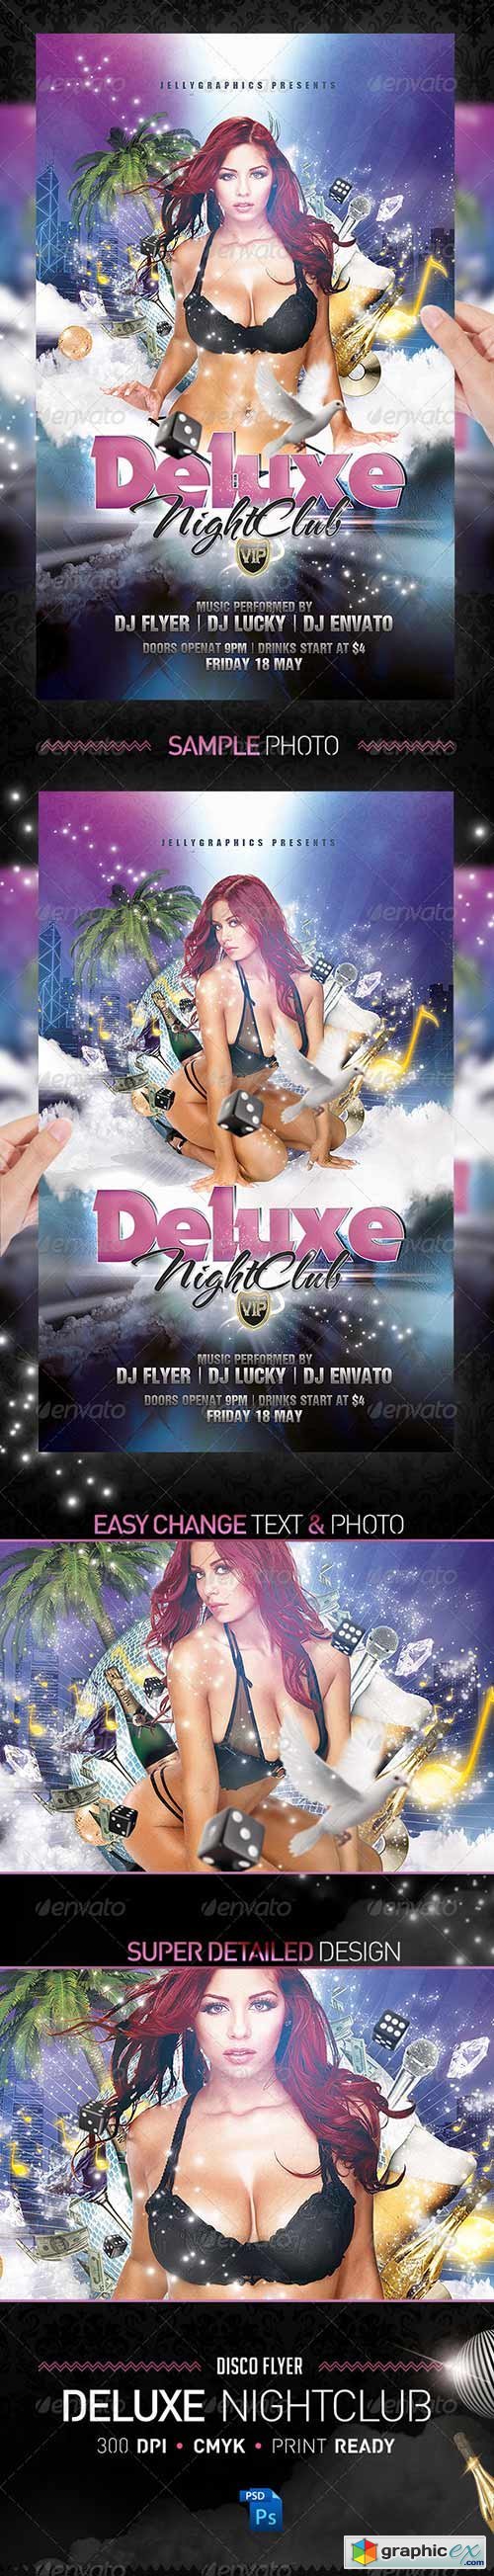 Deluxe NightClub Party Flyer Template